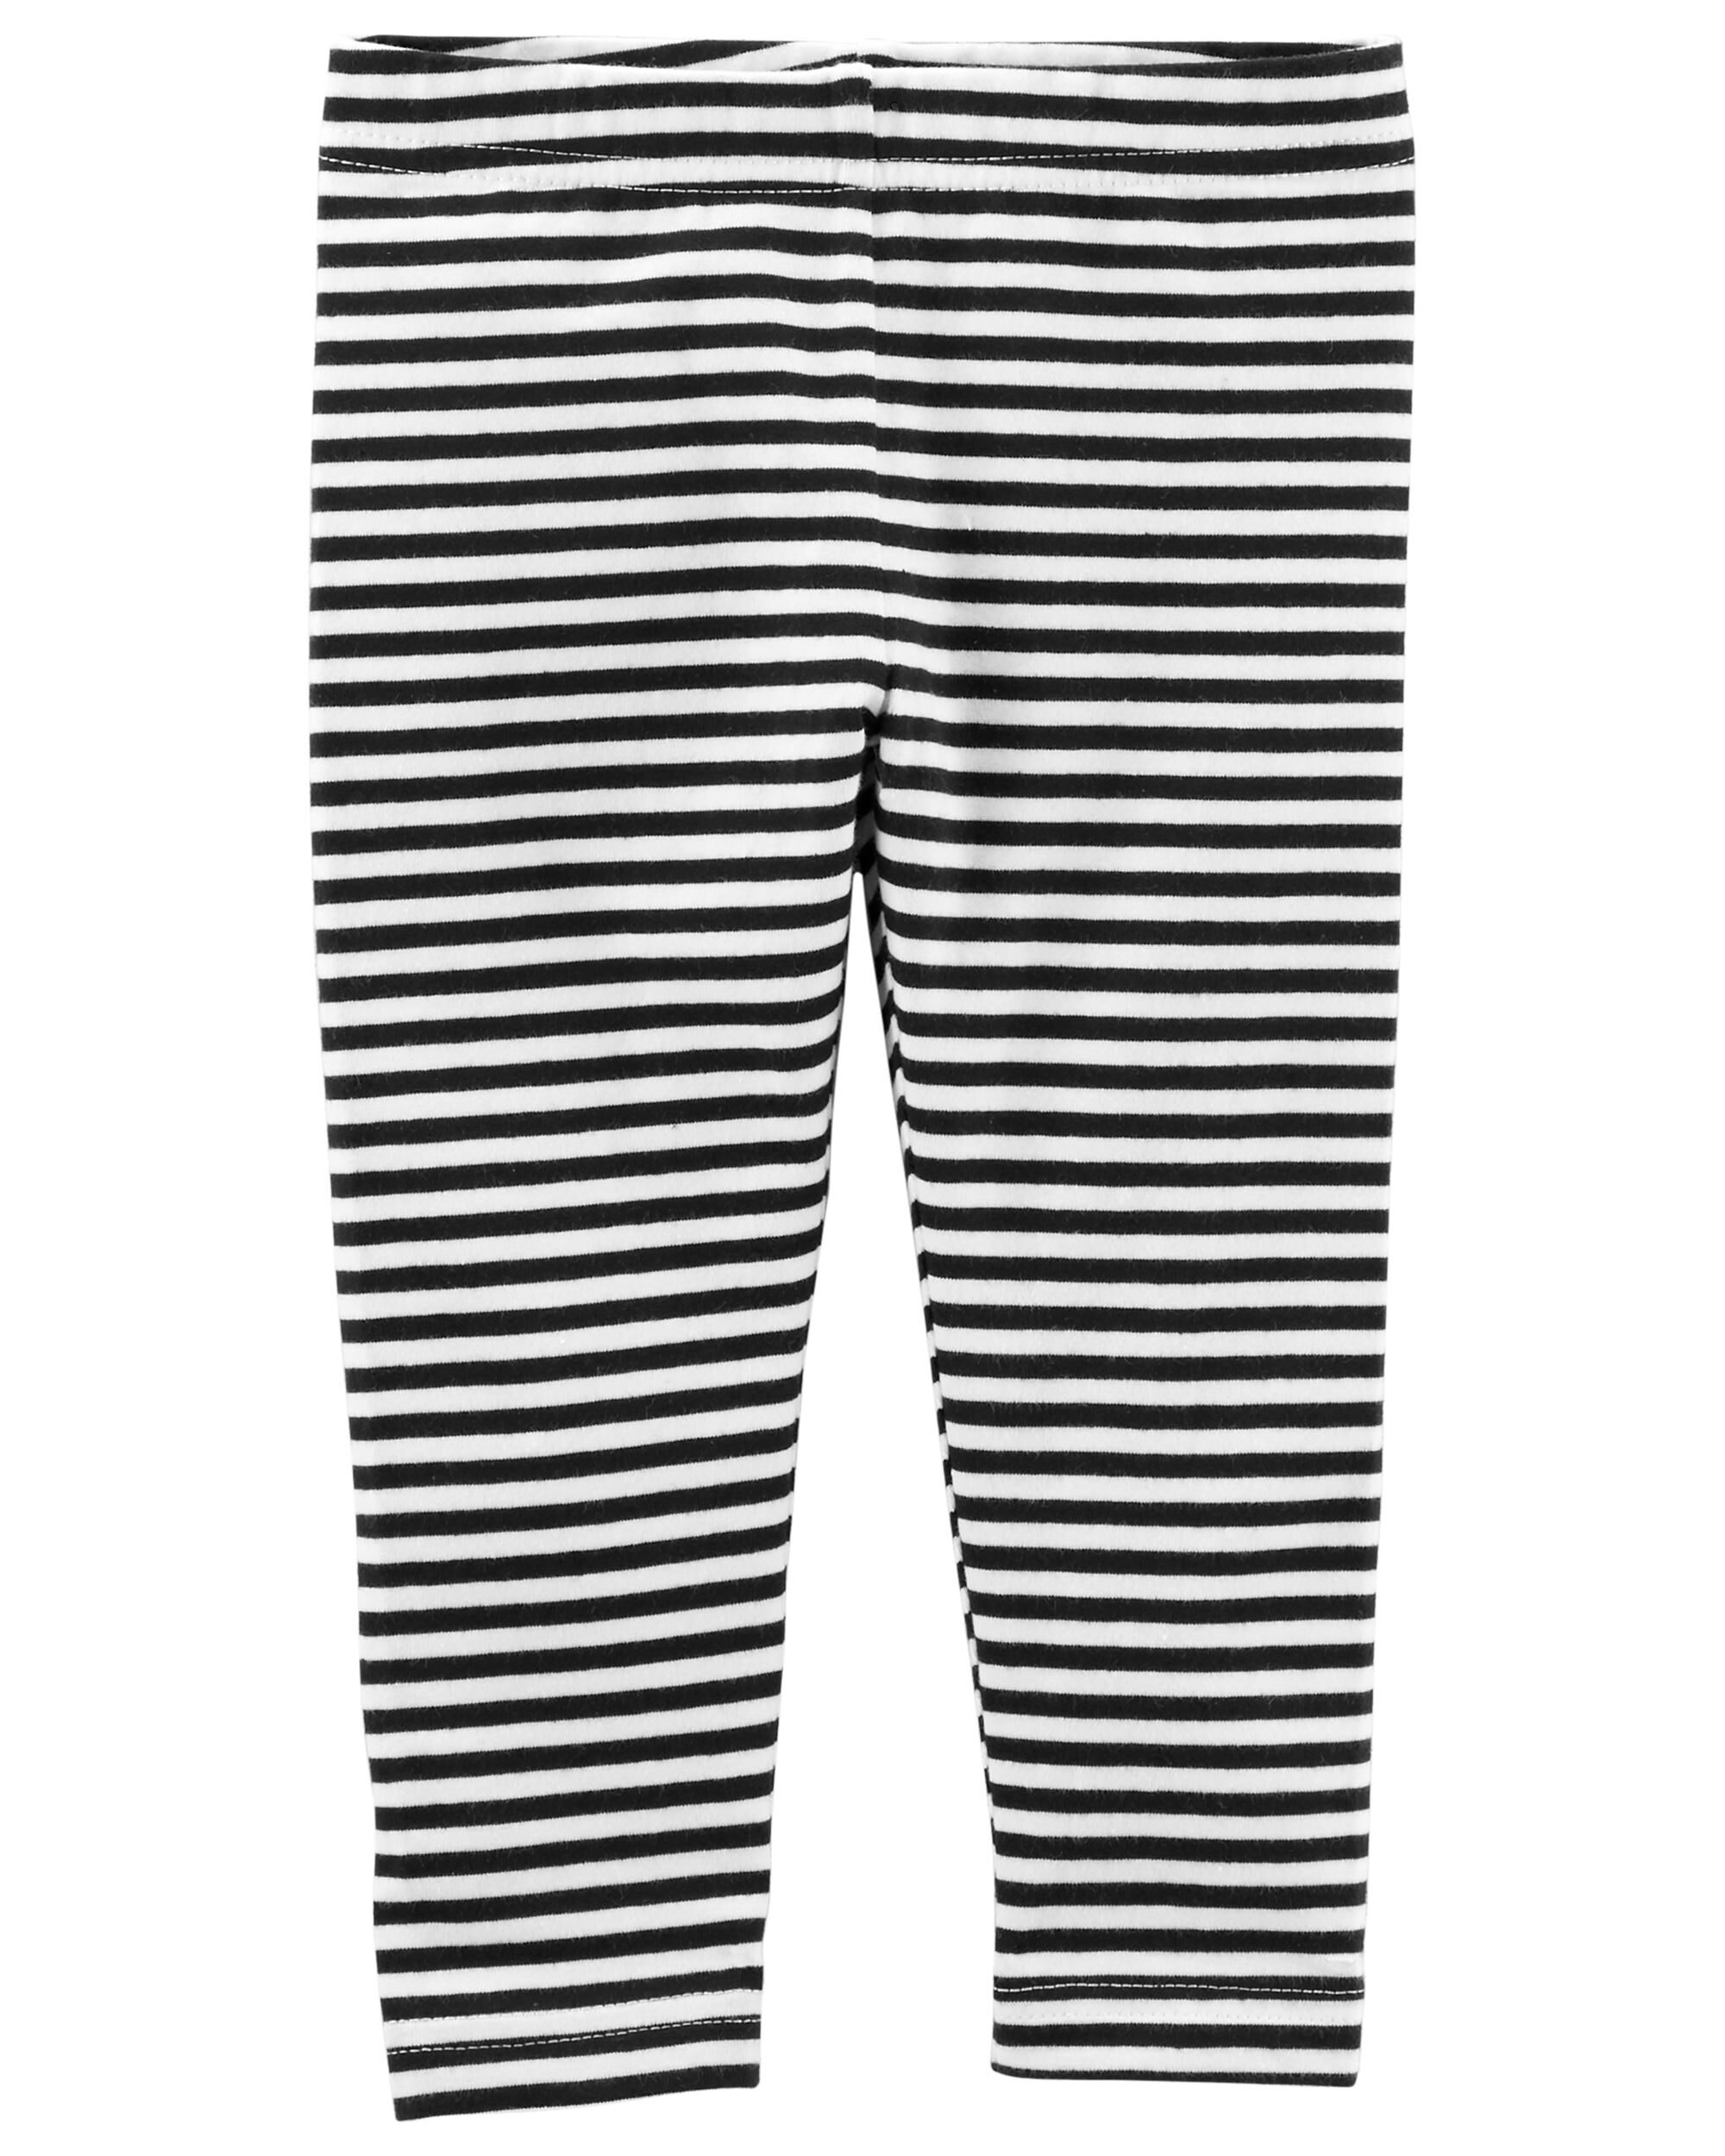 black and white striped capri pants